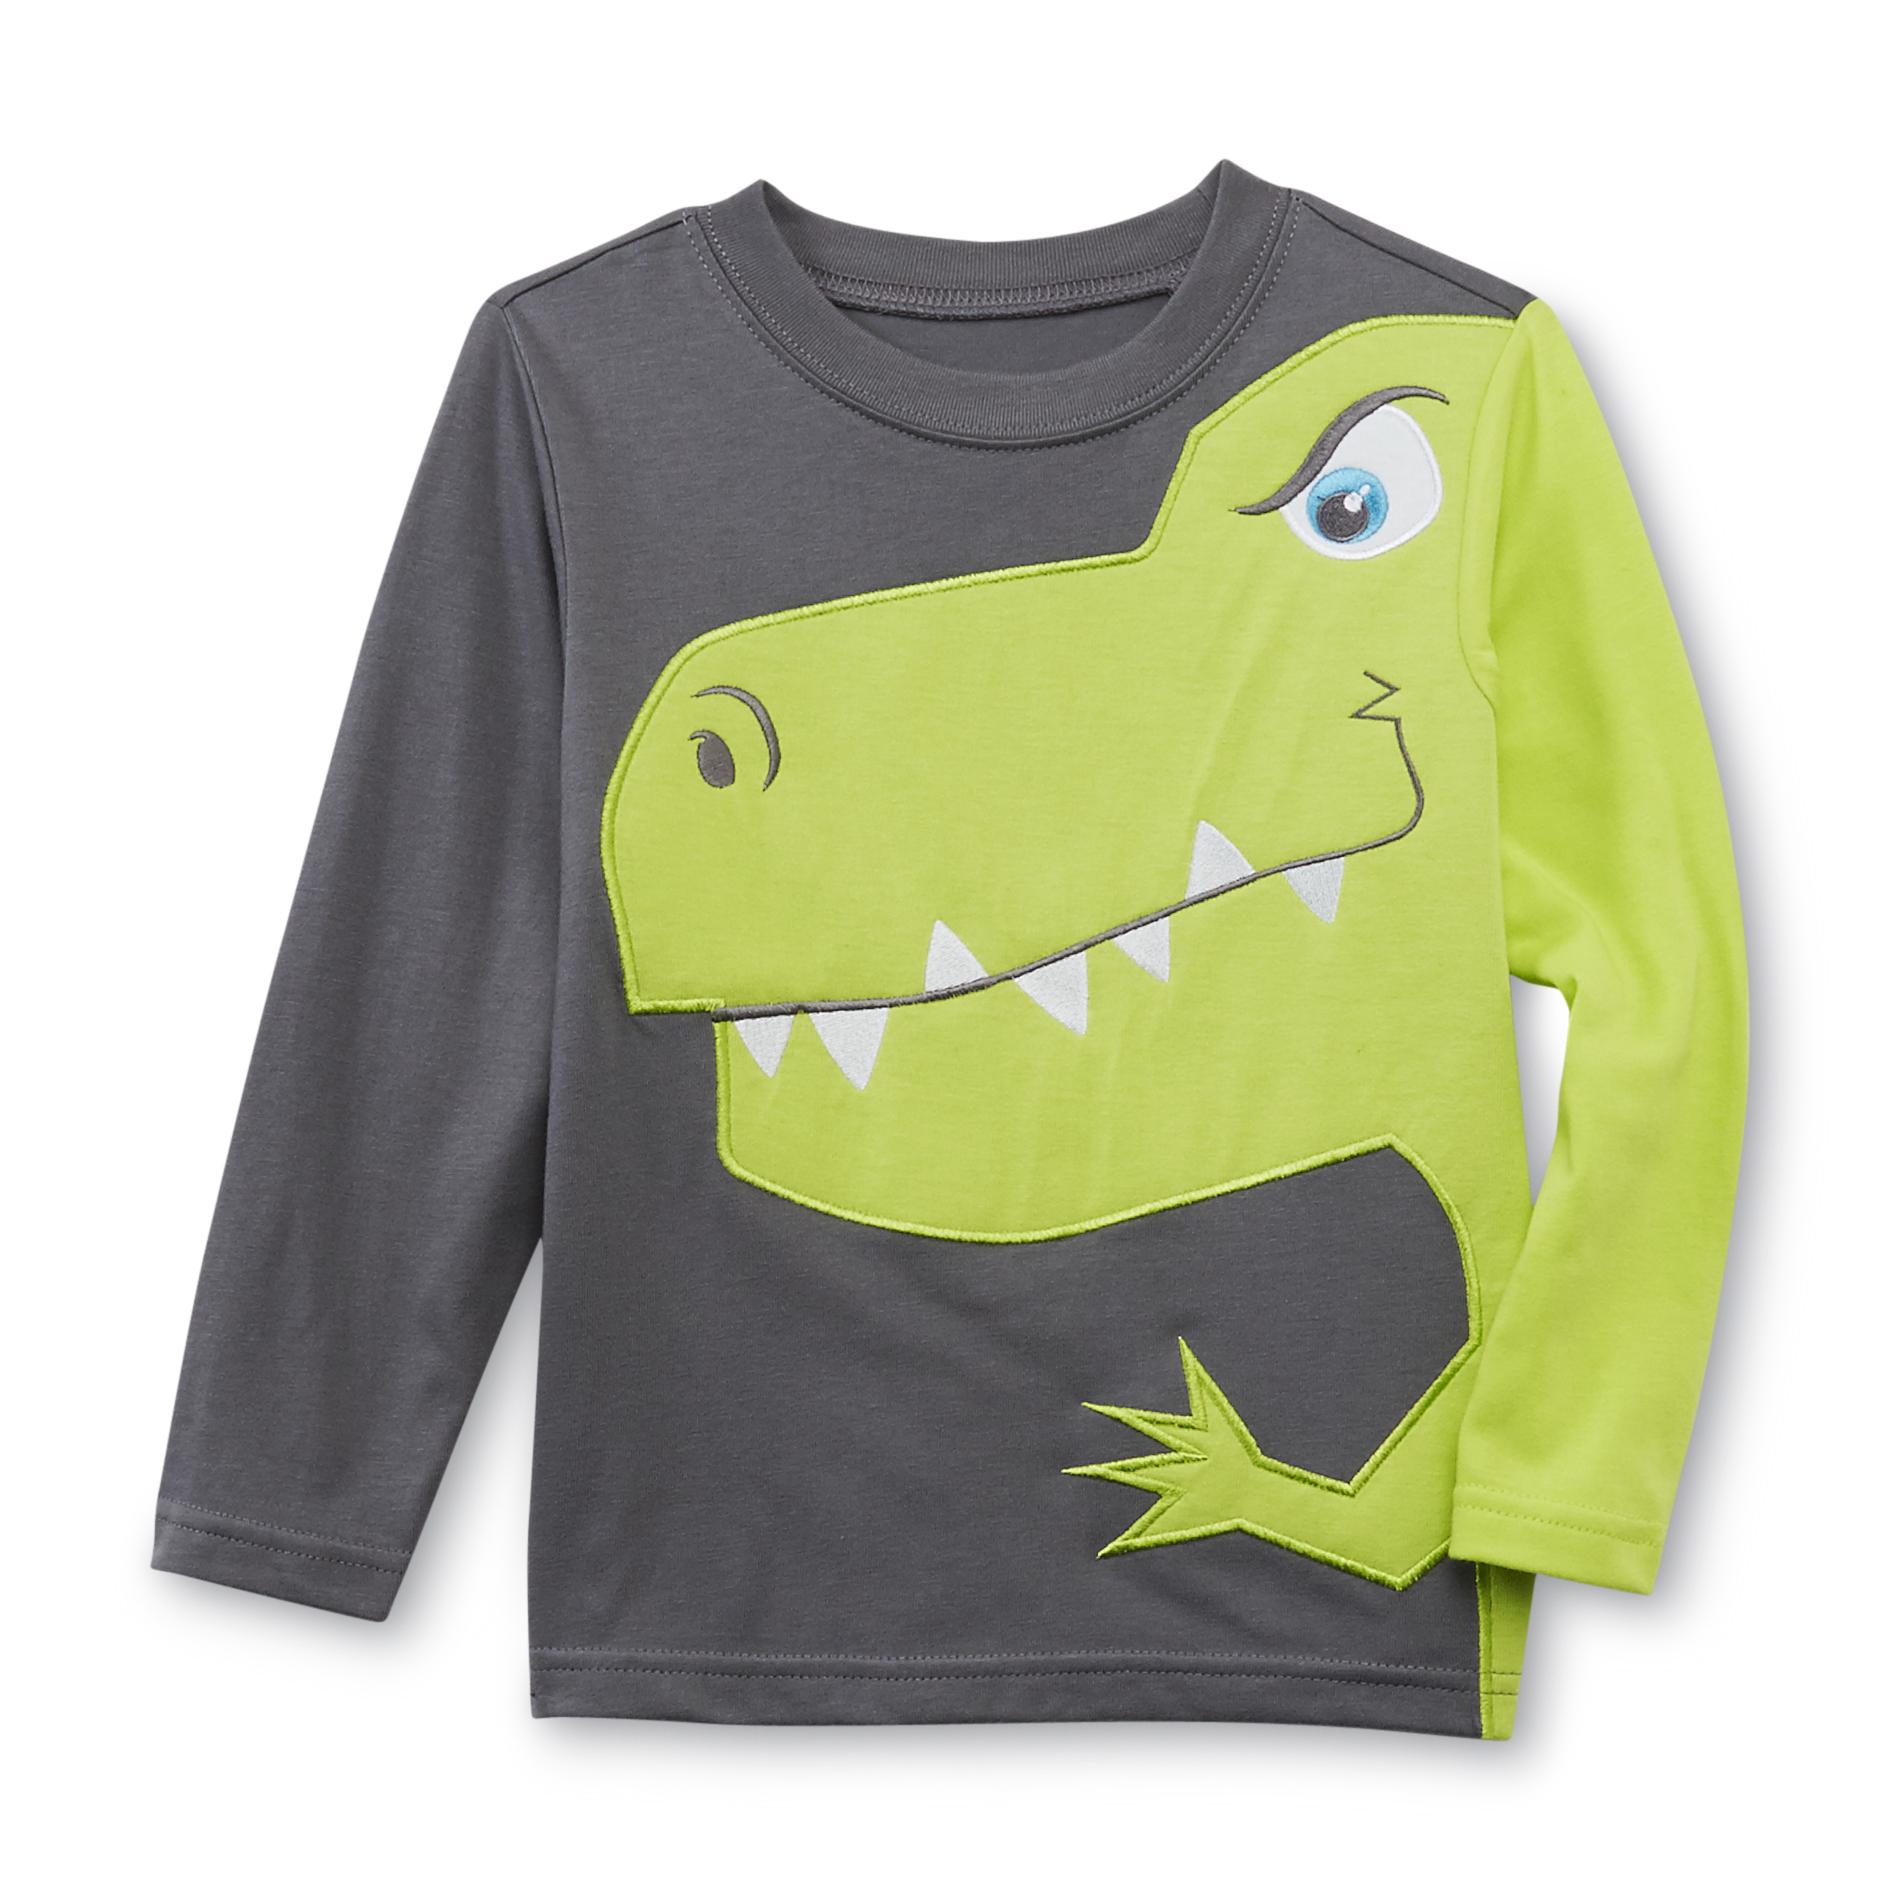 WonderKids Infant & Toddler Boy's Long-Sleeve Applique T-Shirt - Dinosaur